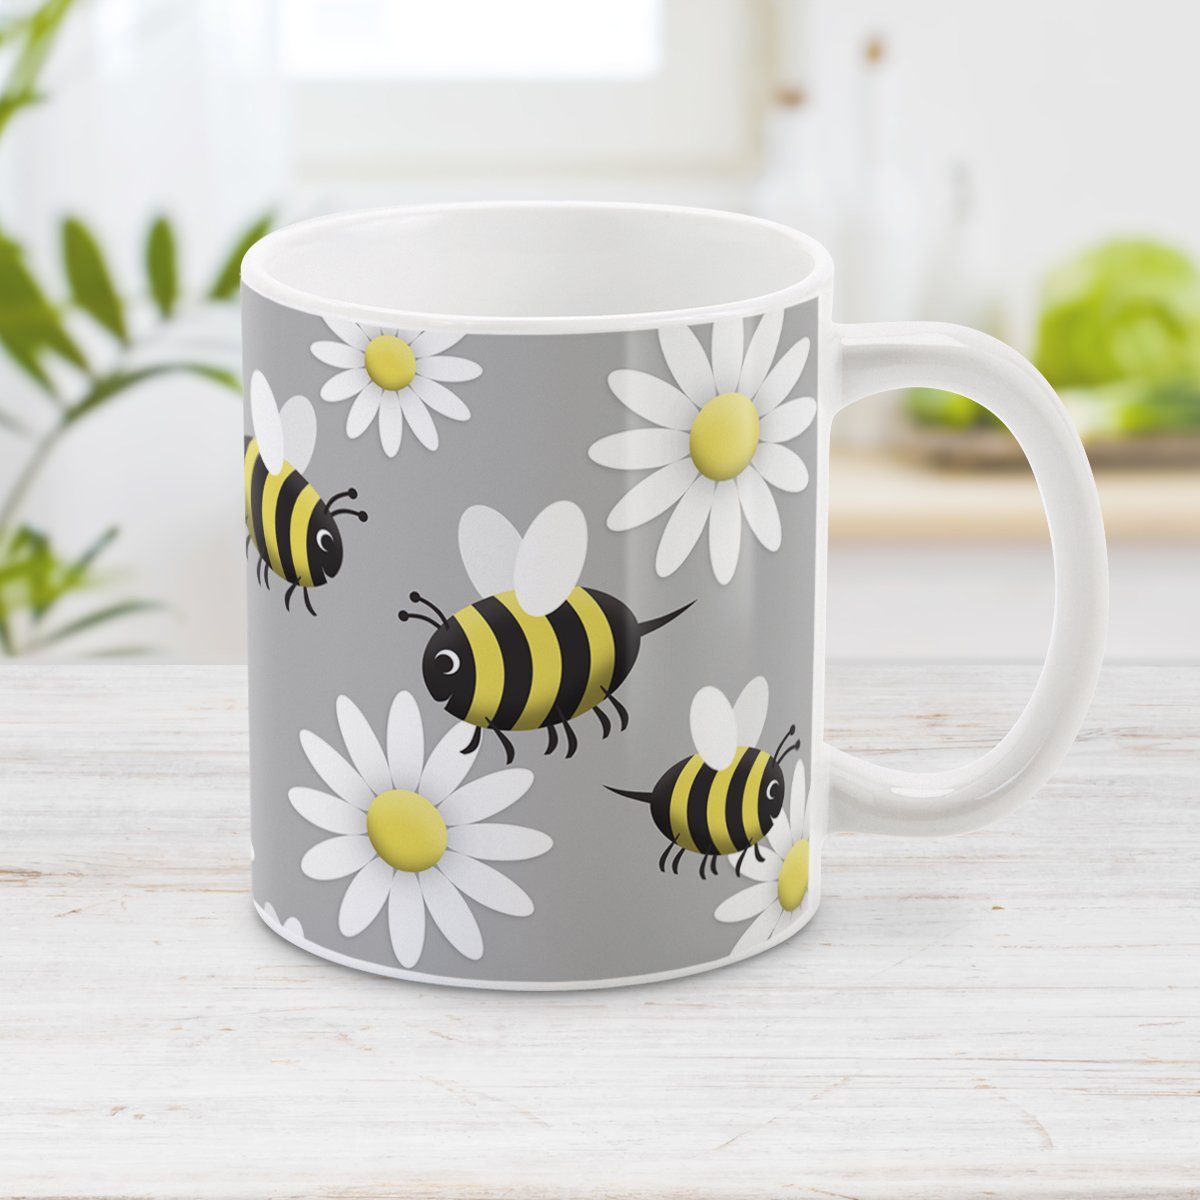 Happy Bee and Daisy Pattern Mug at Amy's Coffee Mugs